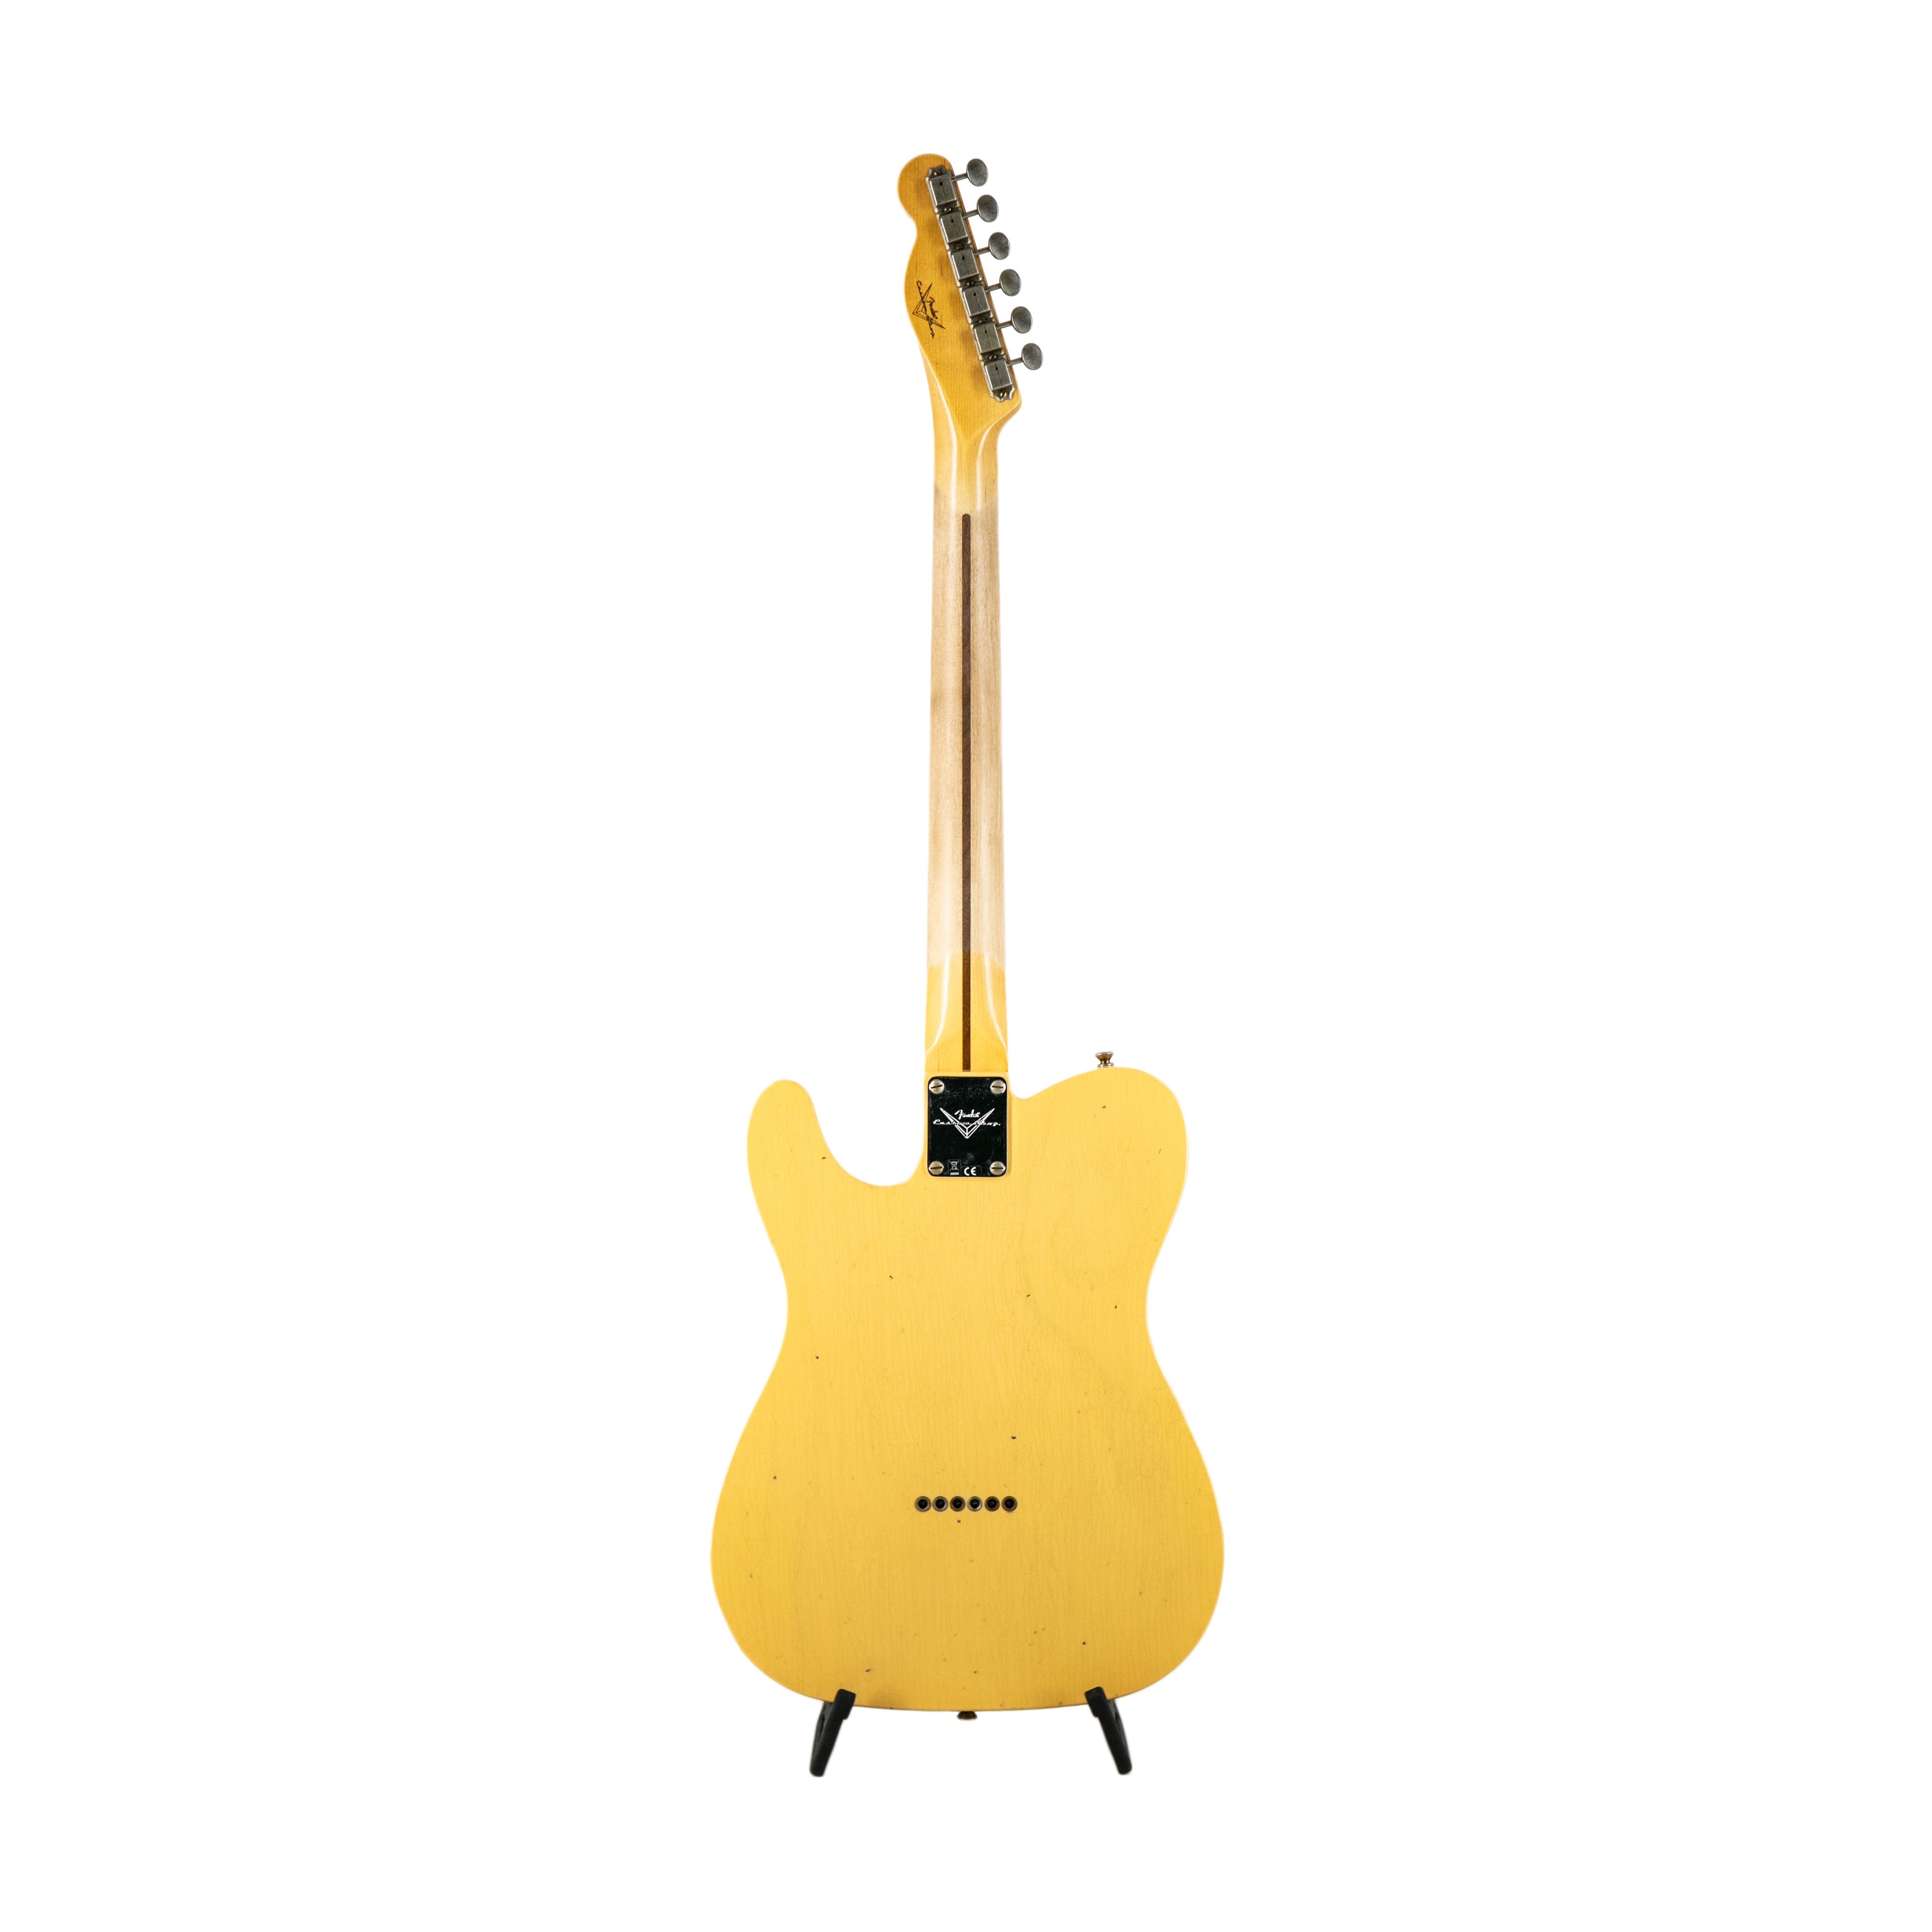 Fender Custom Shop 52 Telecaster Journeyman Relic Electric Guitar, Aged Nocaster Blonde